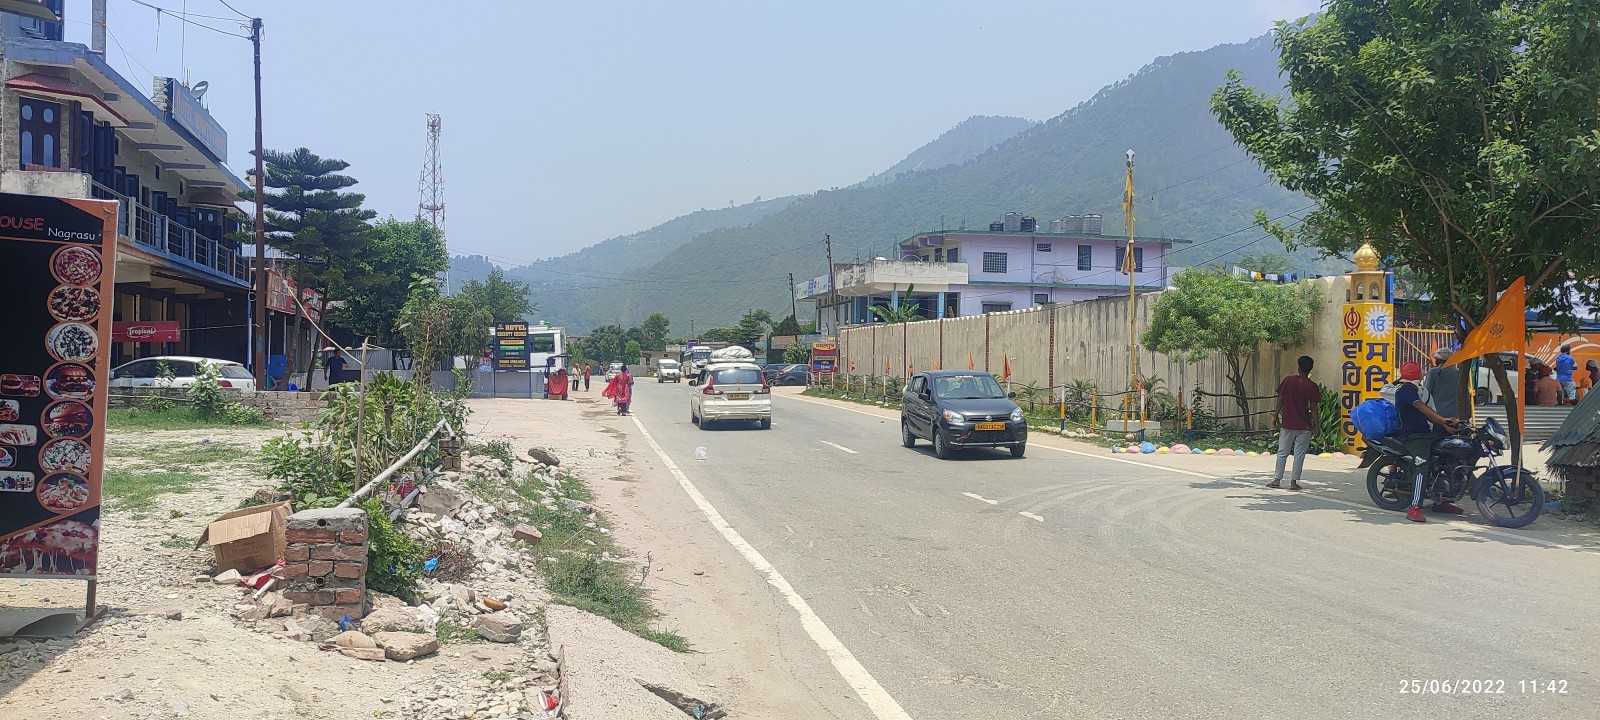 Nagrasu village, Rudraprayag